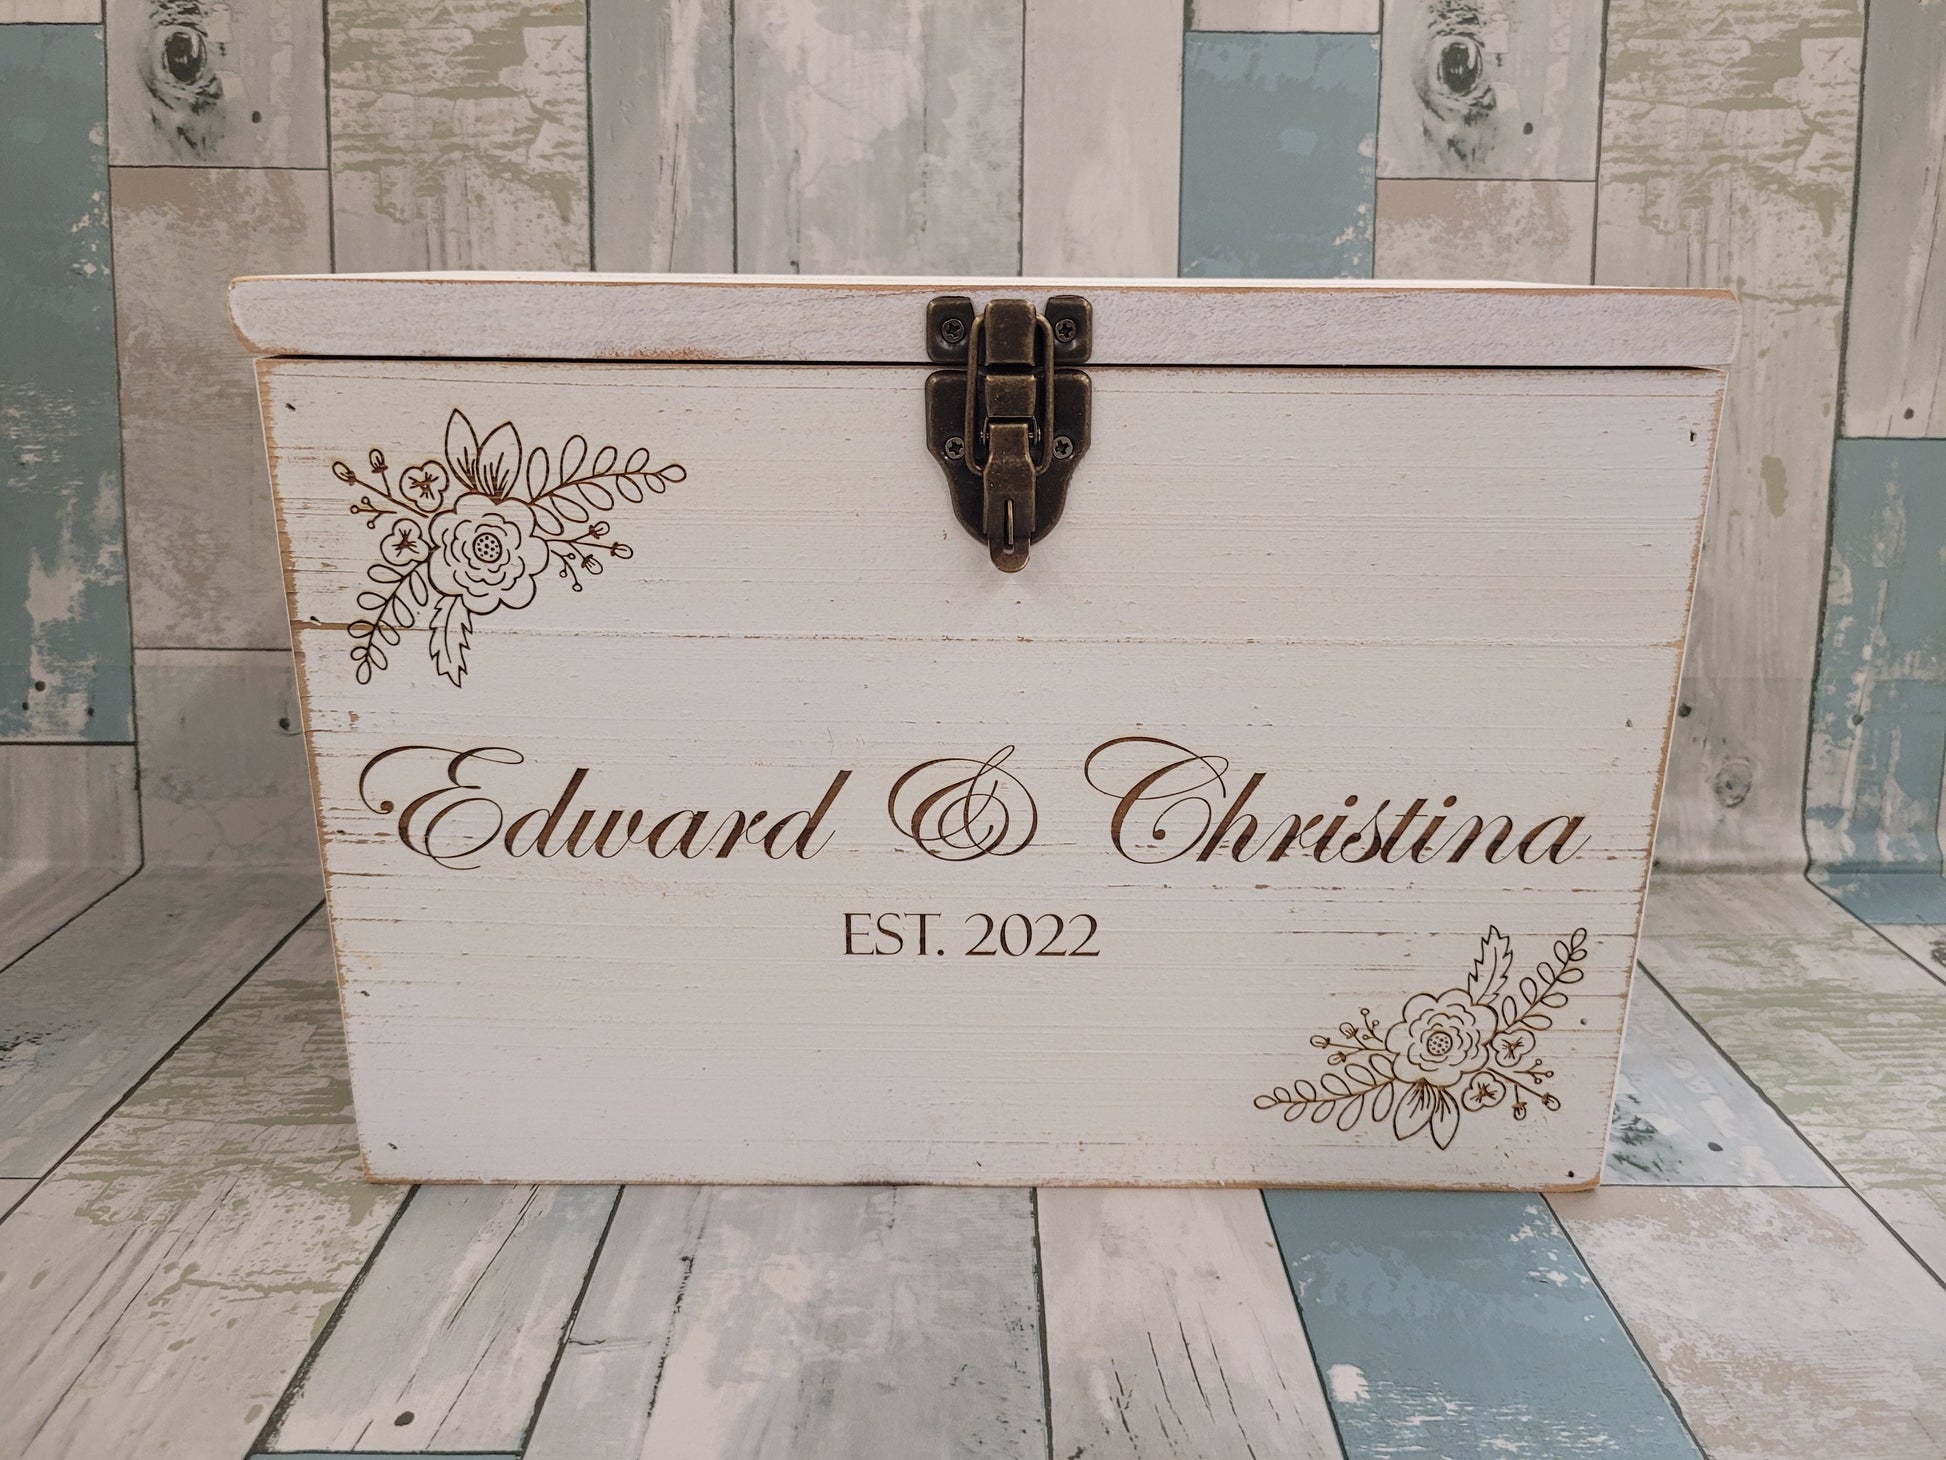 Custom Wedding Card Box